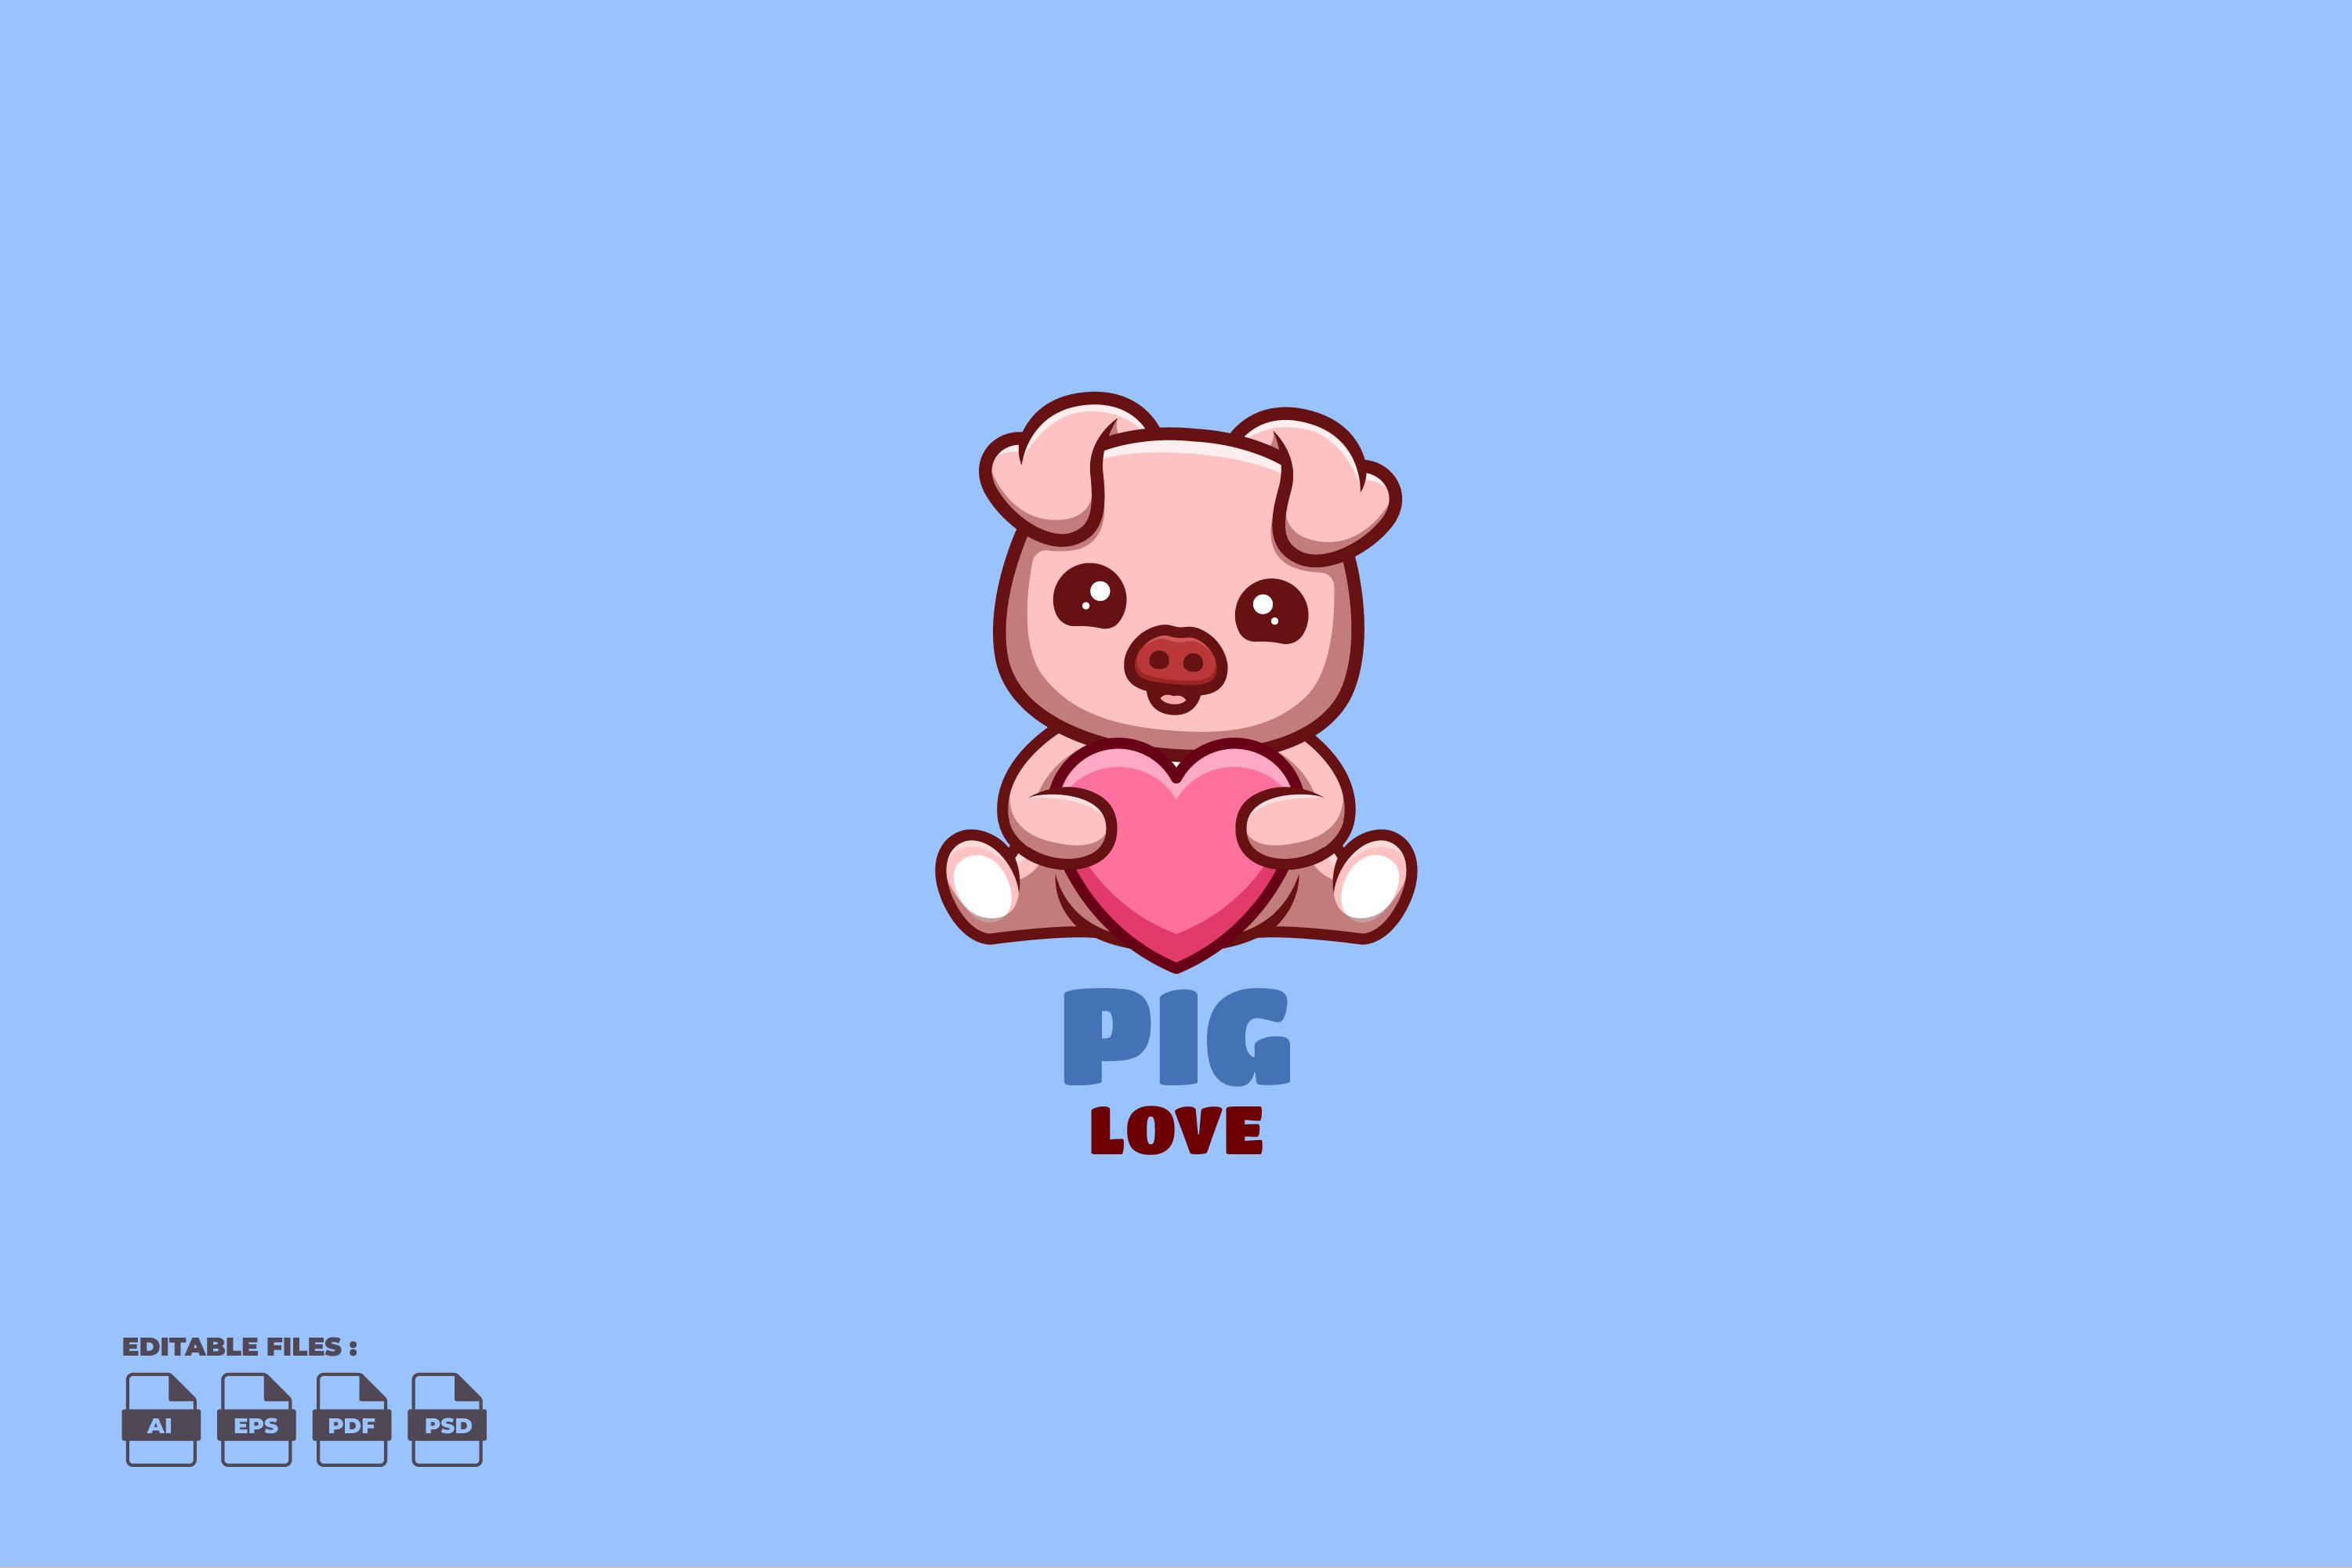 Love Pig Cute Mascot Logo cover image.